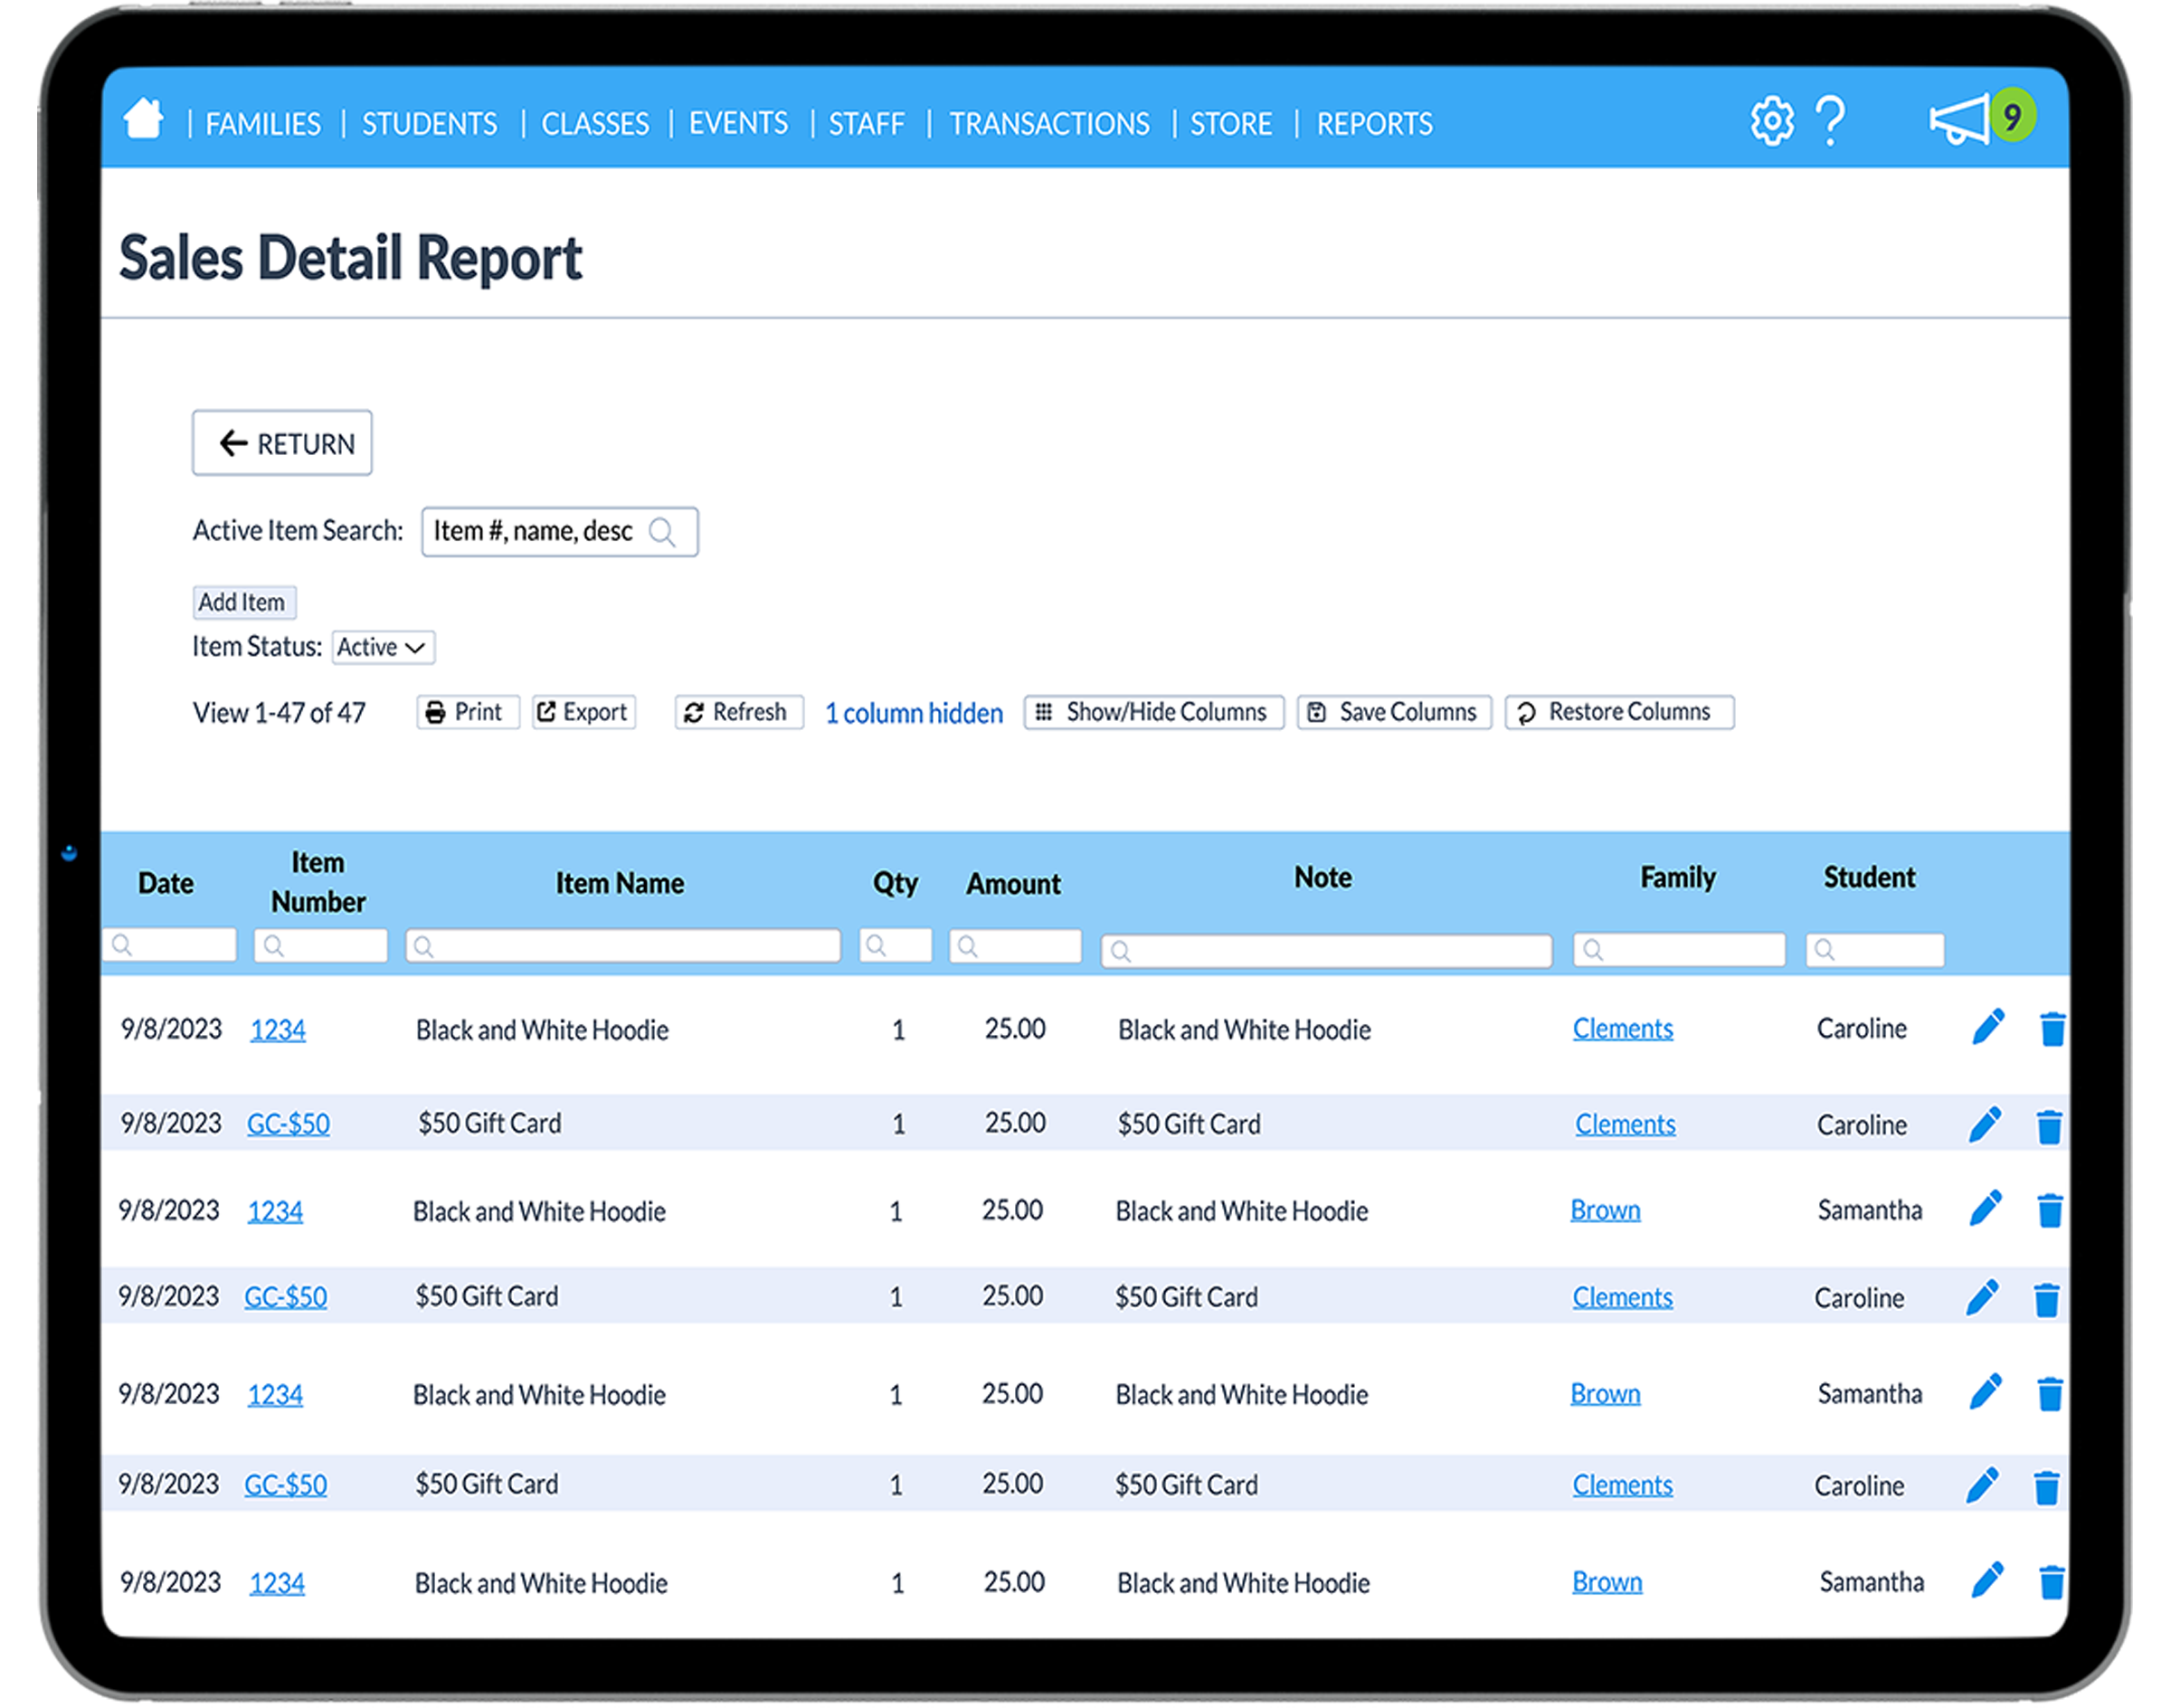 sales detail report screen tablet